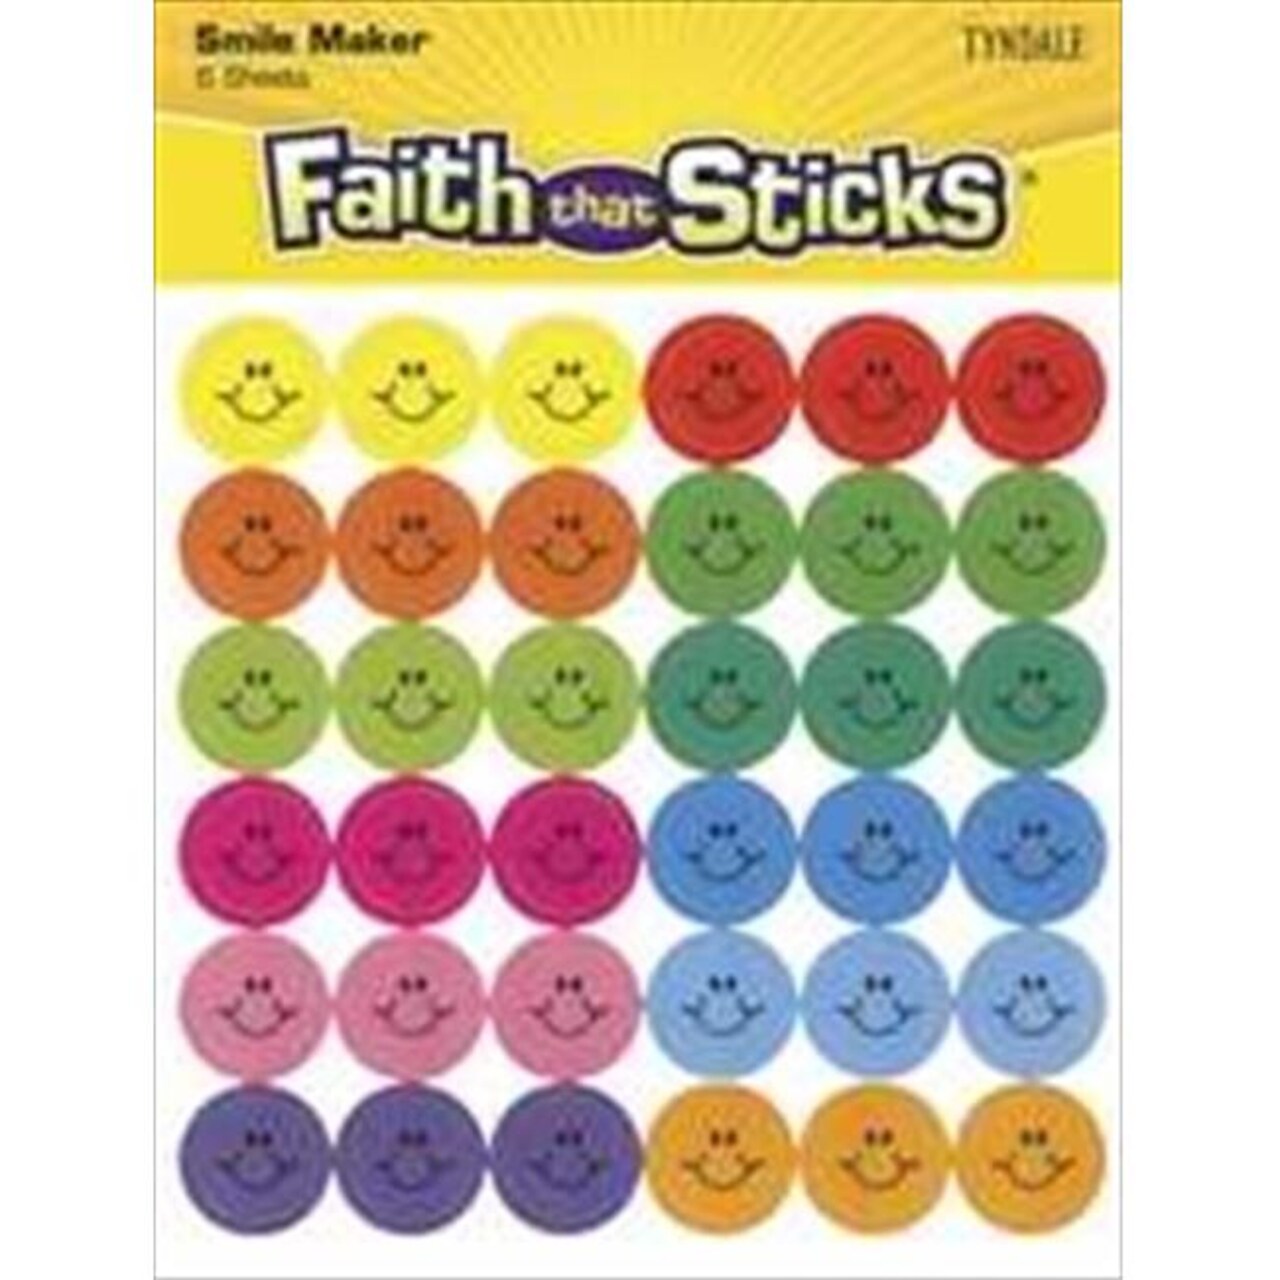 Standard Publishing 110043 Sticker Mini Happy Face 6 Sheets Faith That Sticks